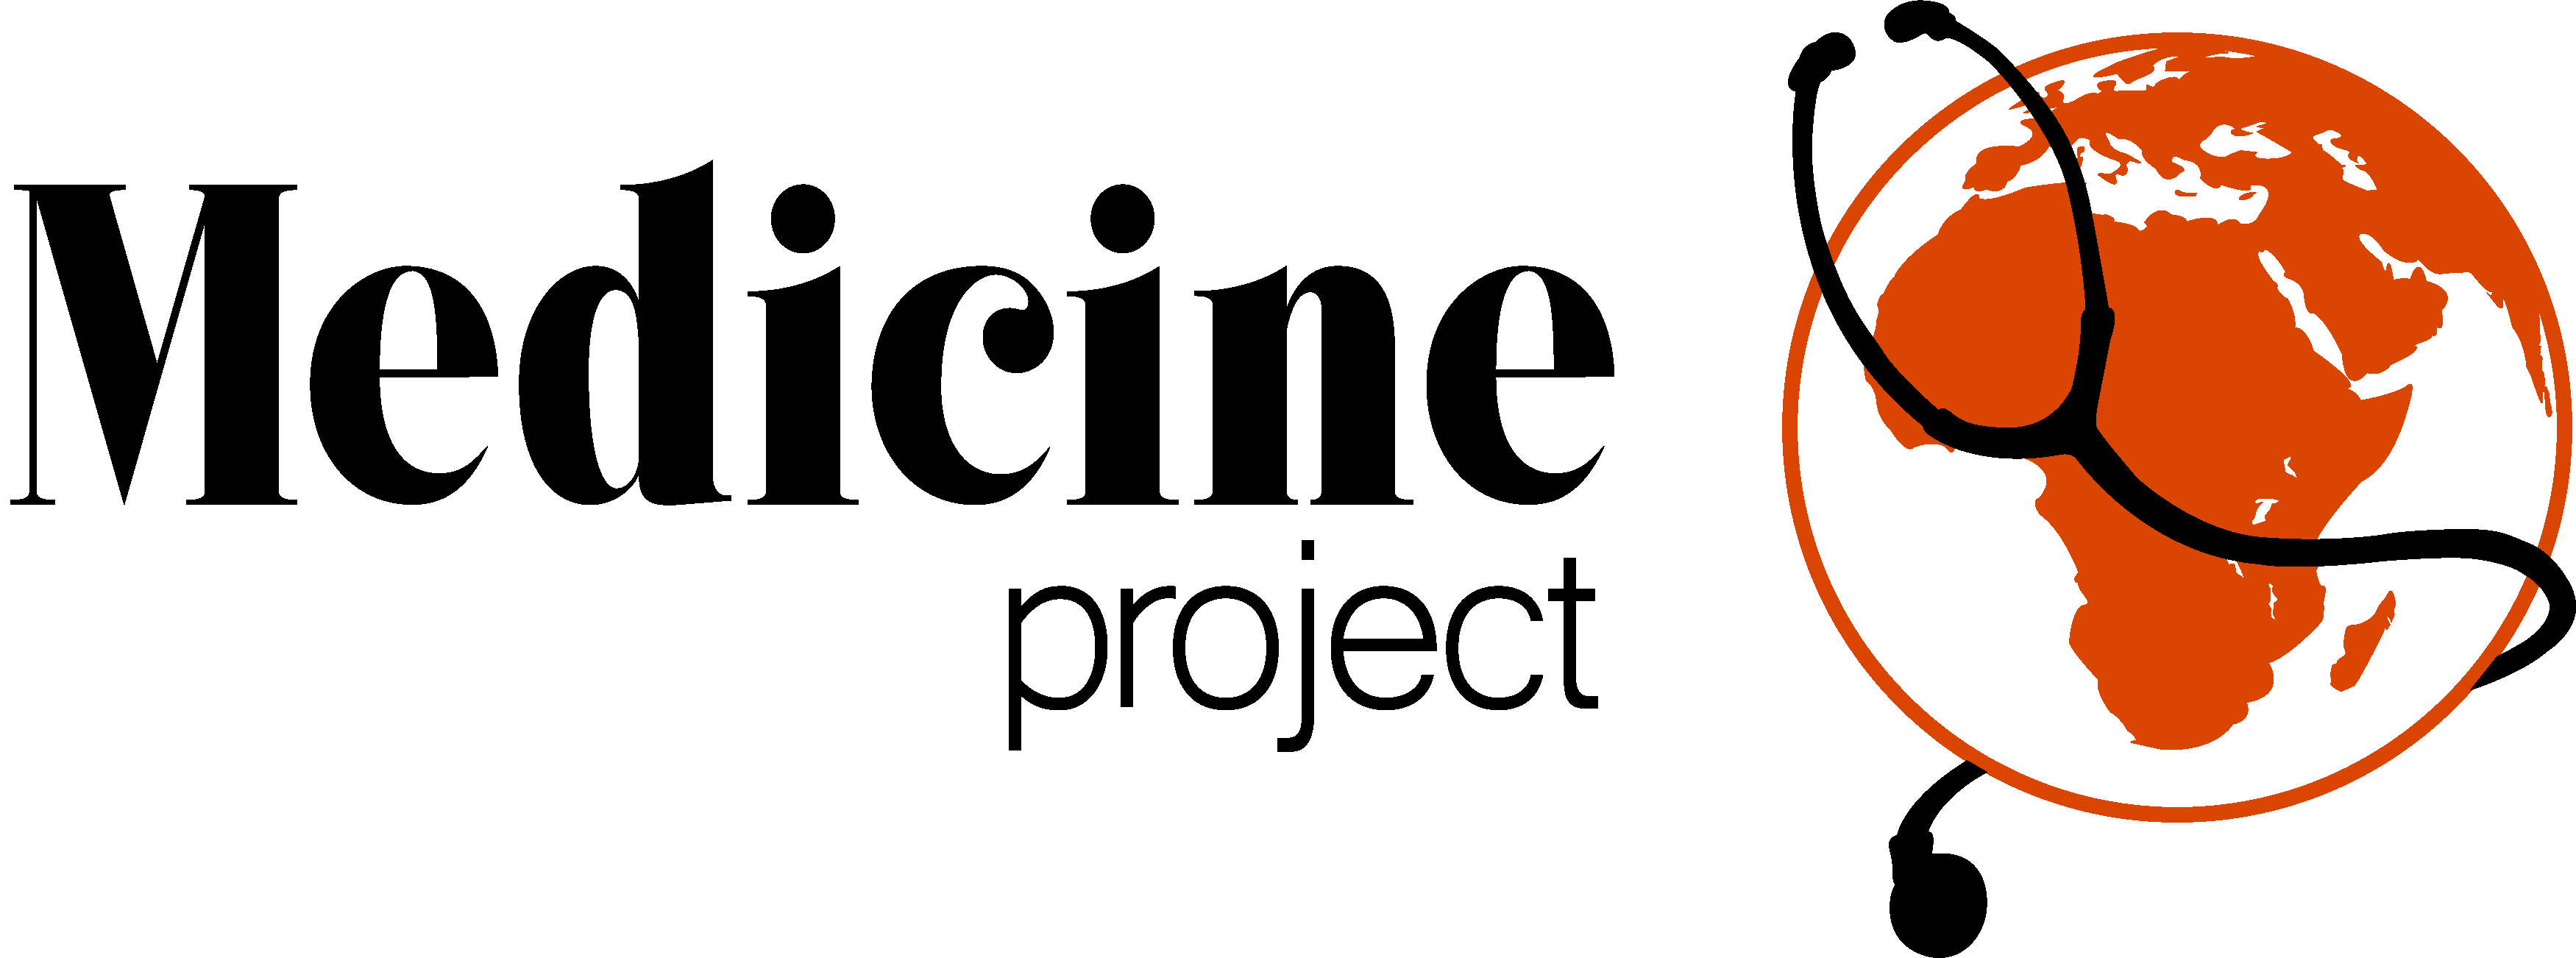 Medicine Project logo